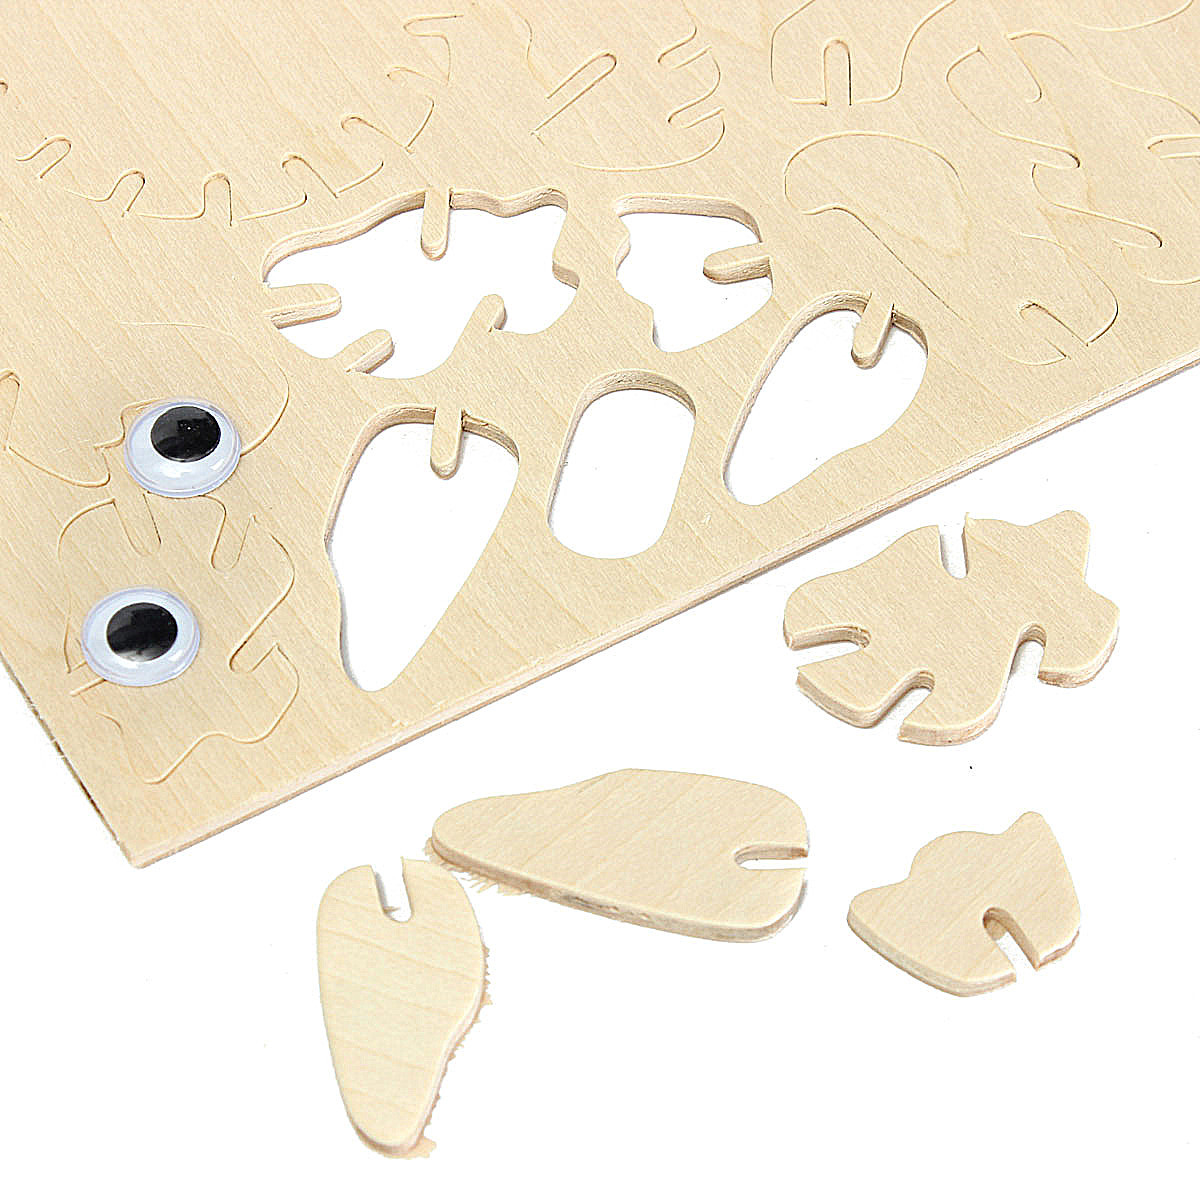 3D-Wooden-Owl-Puzzle-Jigsaw-Children-Kids-Toy-Pre-Cut-Wooden-Shapes-Model-1031137